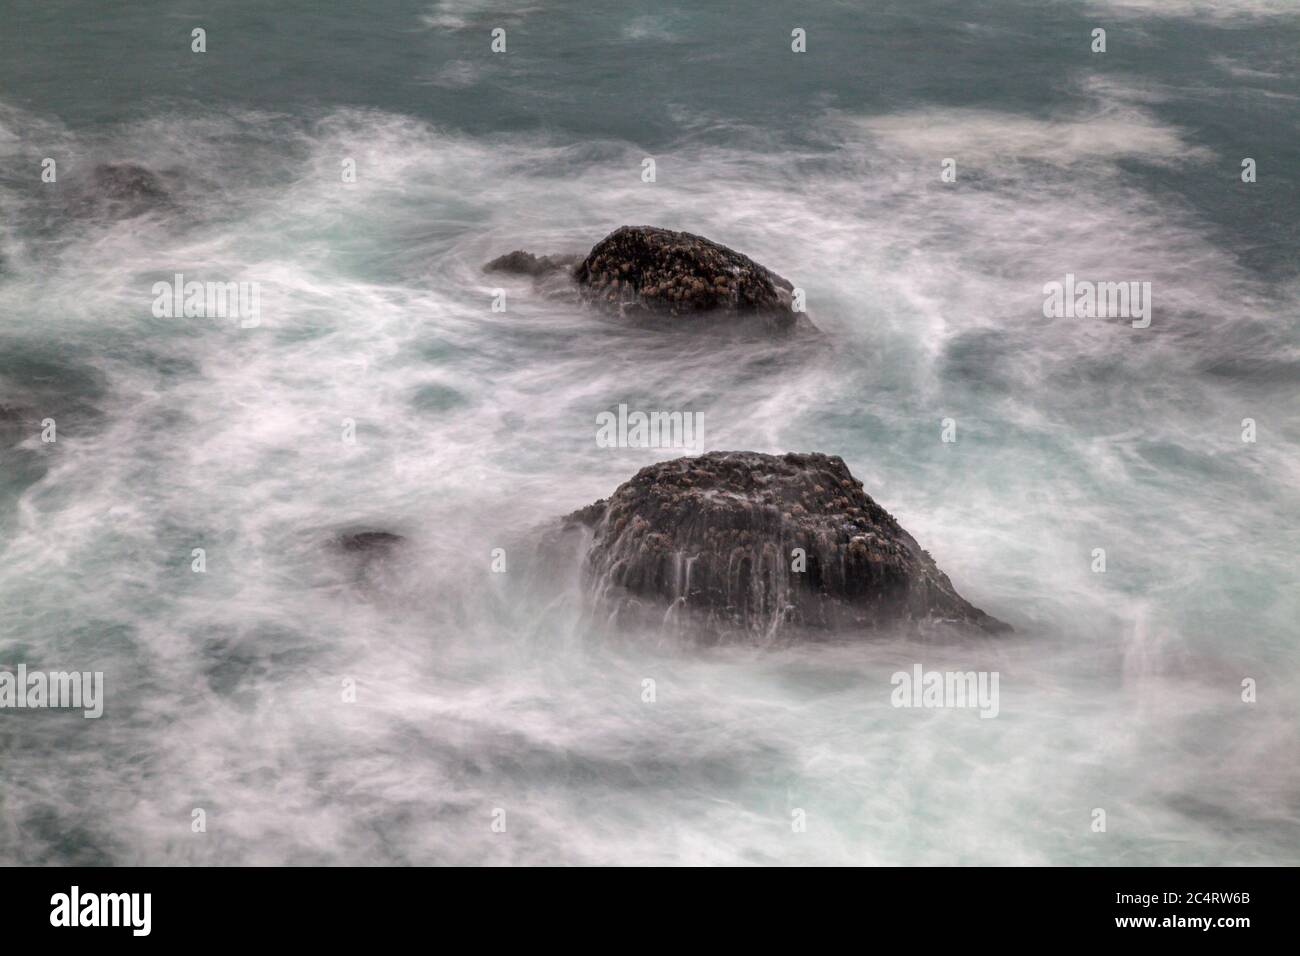 Waves crashing on rocks in Mendocino, California. Stock Photo